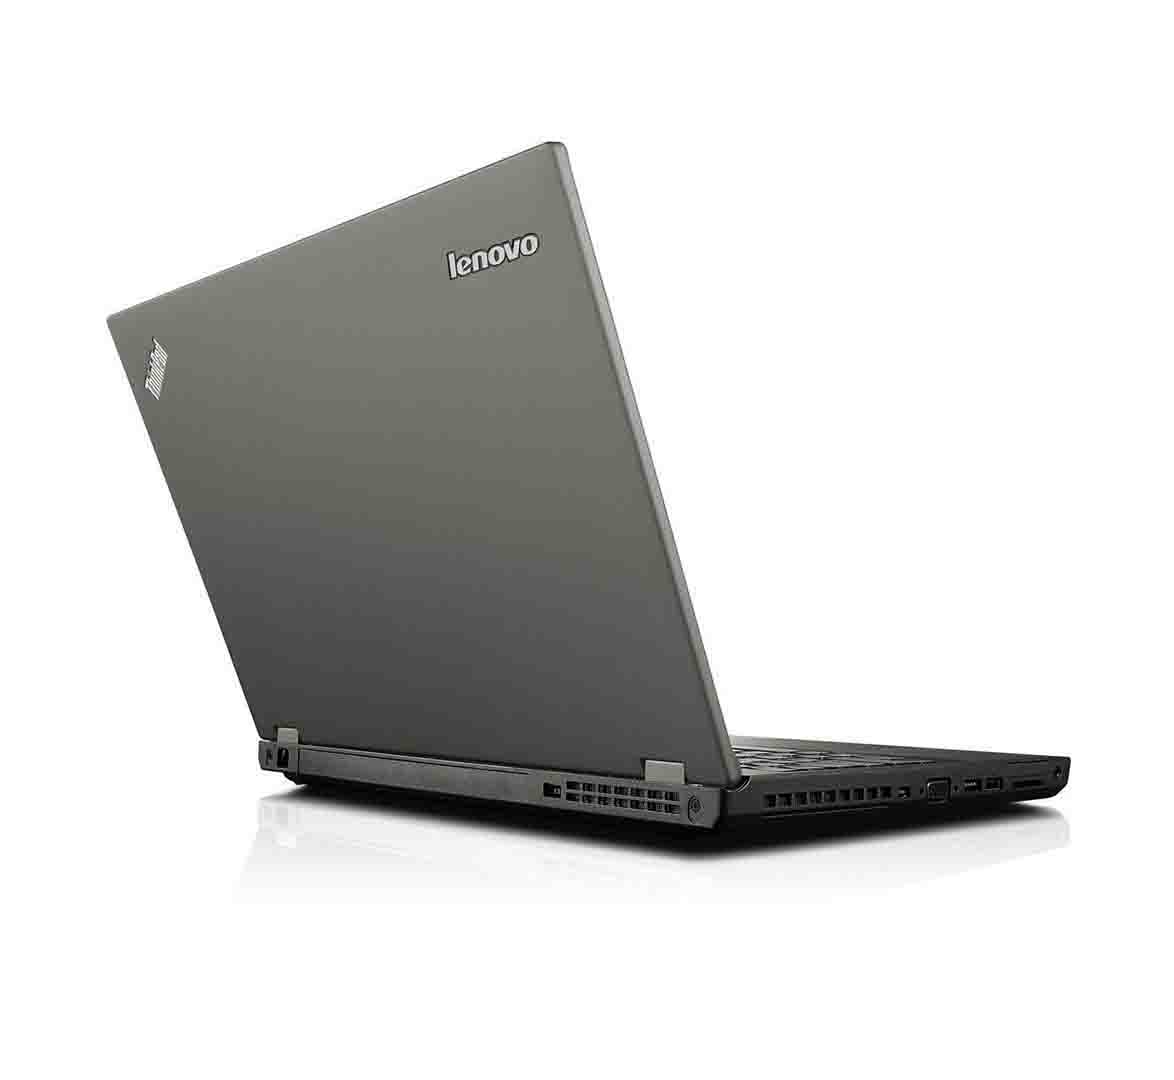 Lenovo W540 Laptop, Intel Core i7-4th Gen. CPU, 8GB RAM, 256GB SSD, NVIDIA QUADRO K1100M , 15.6 Inch Display, Windows 10 Pro